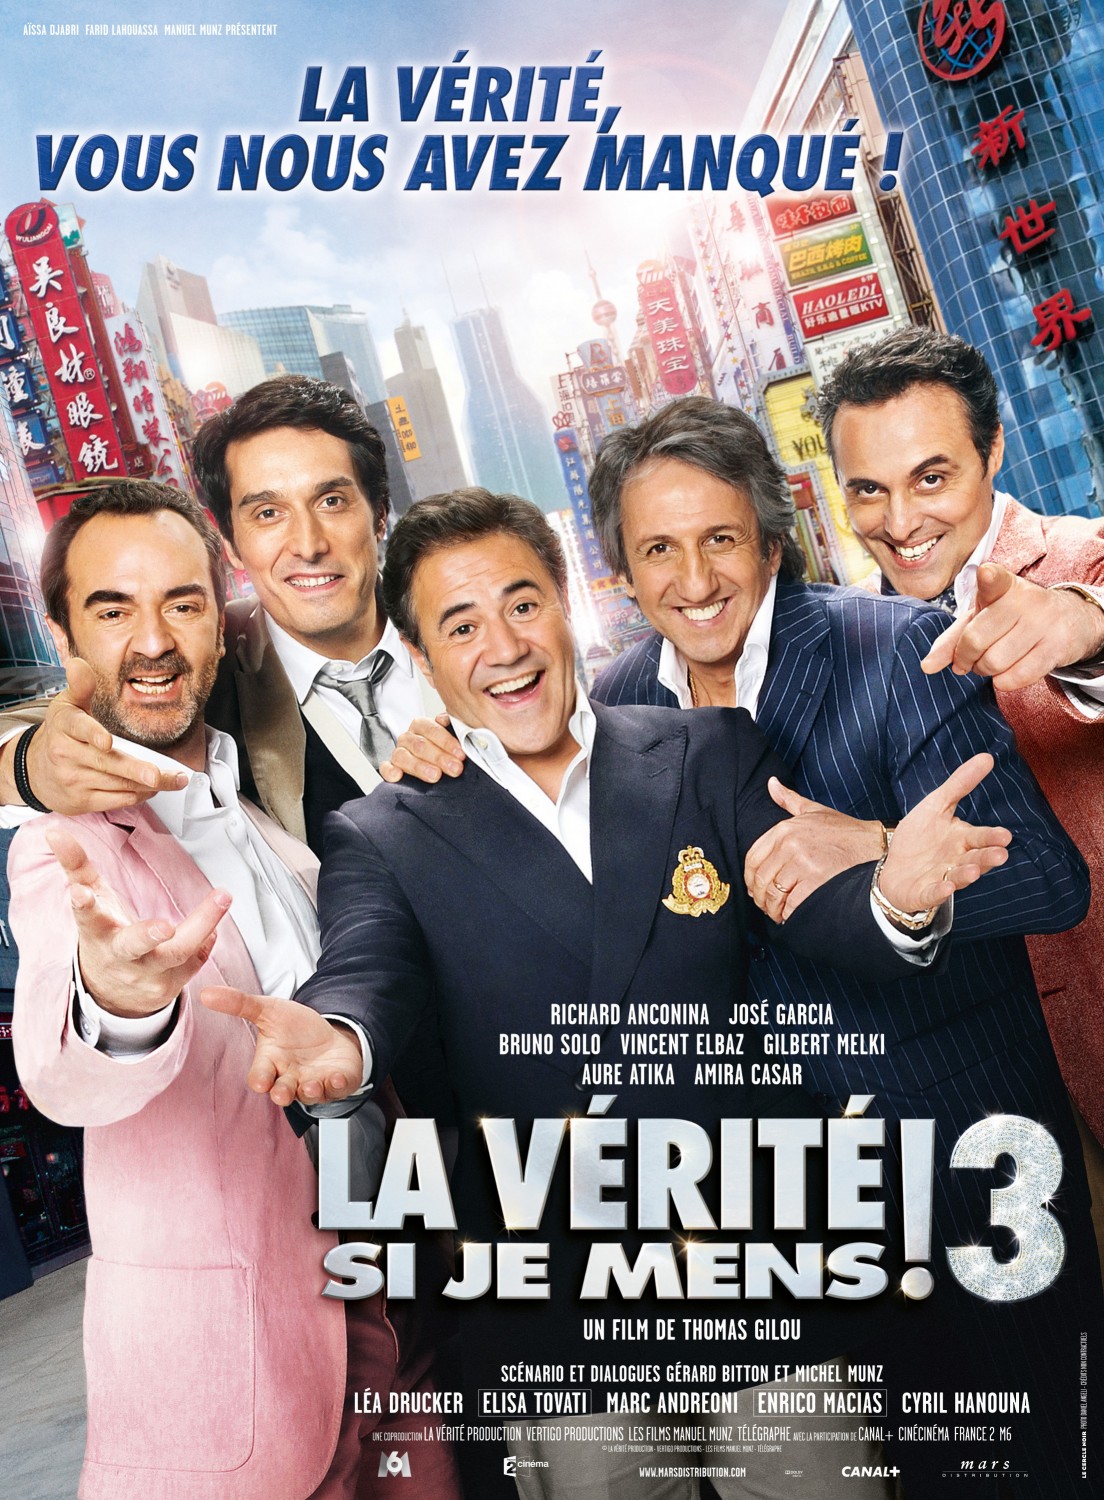 Extra Large Movie Poster Image for La vérité si je mens! 3 